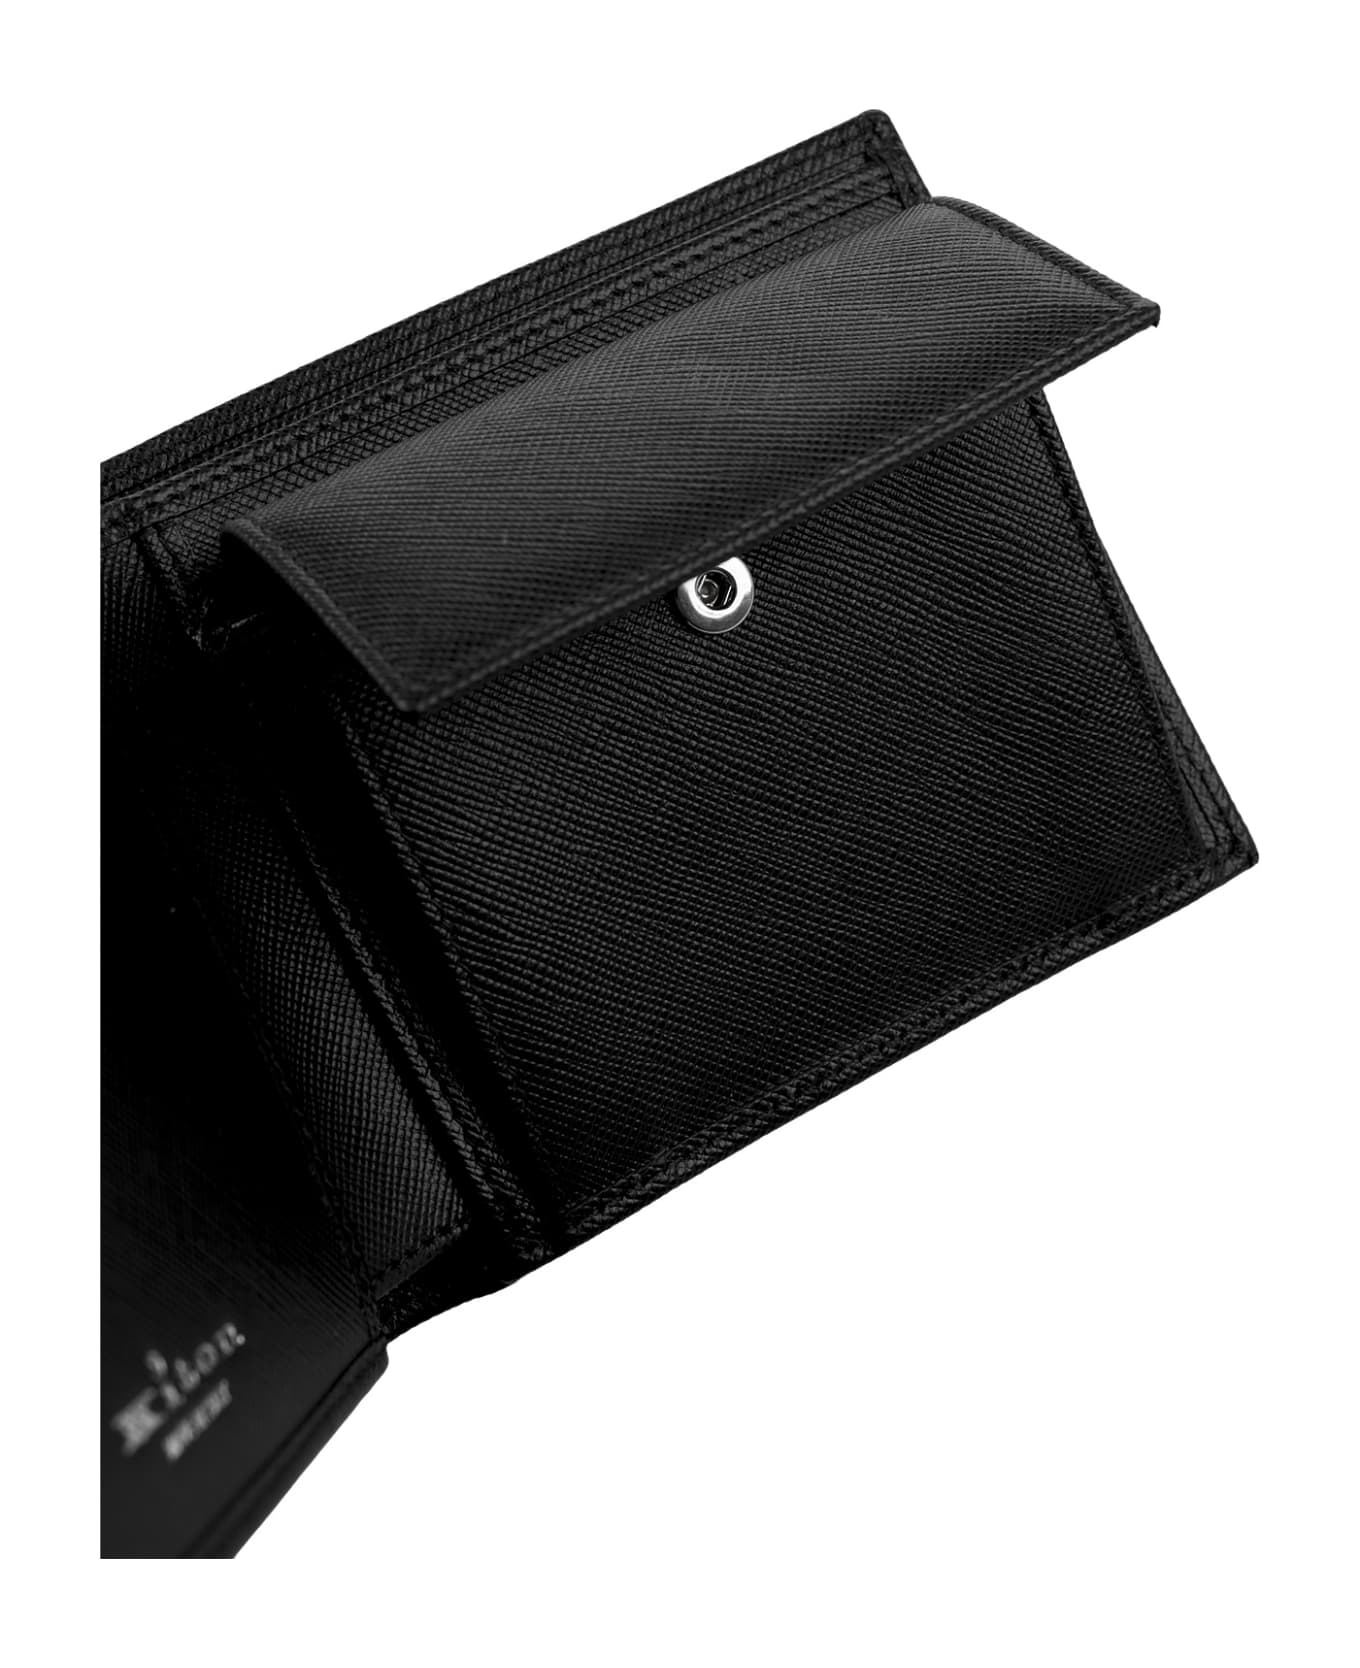 Kiton Black Leather Wallet With Logo - Black 財布